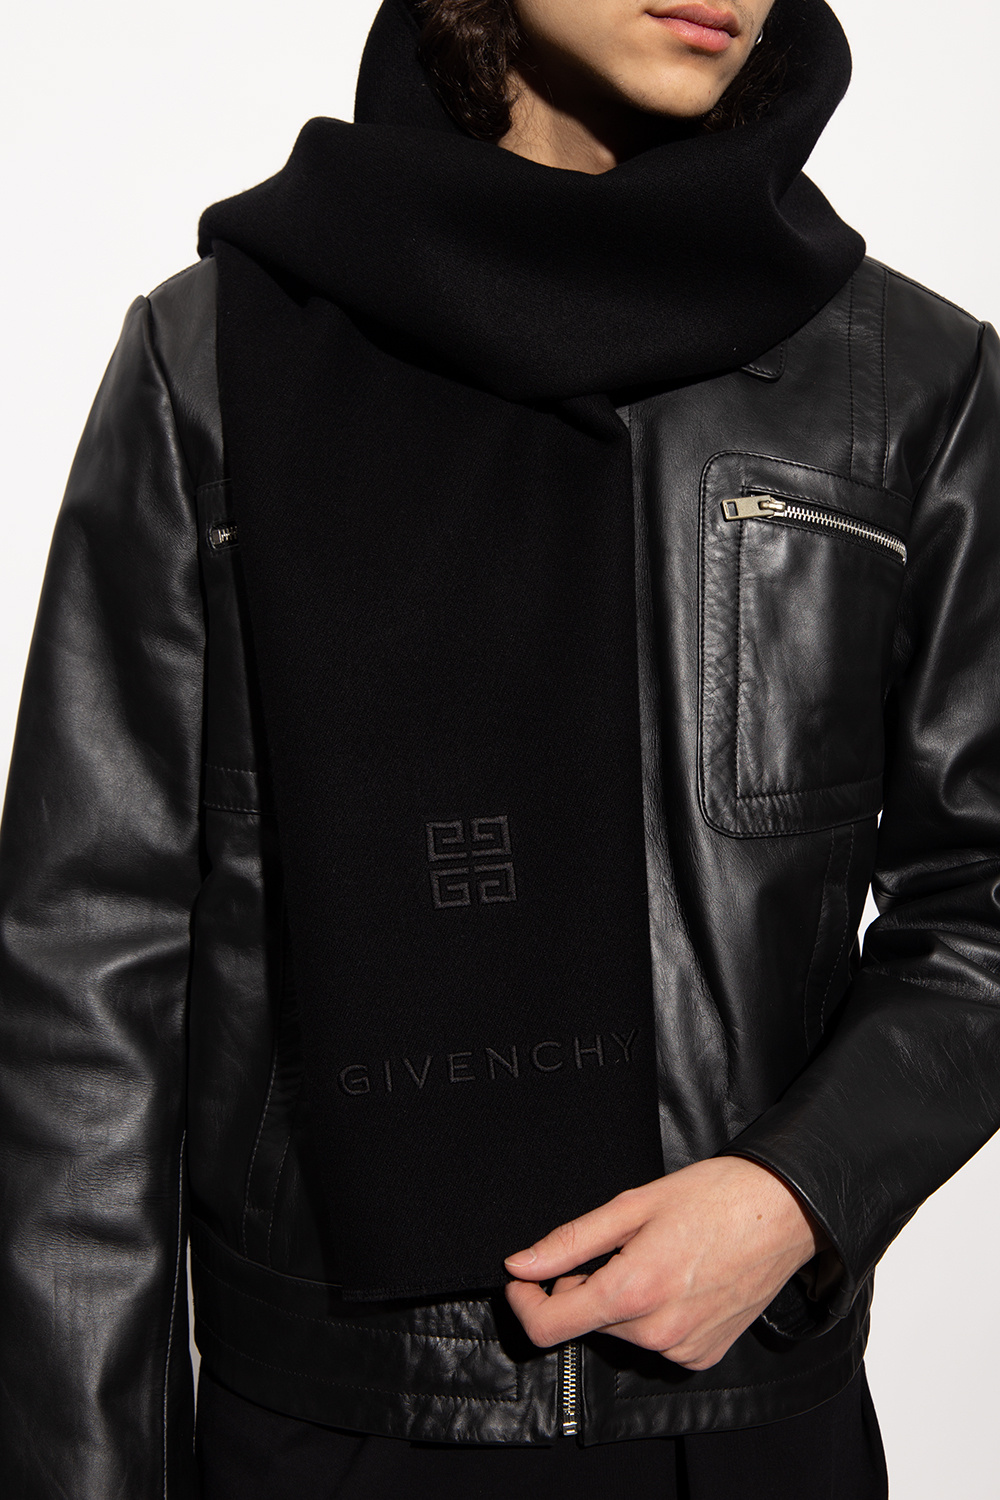 Givenchy Givenchy 4G jacquard knitted top Grün